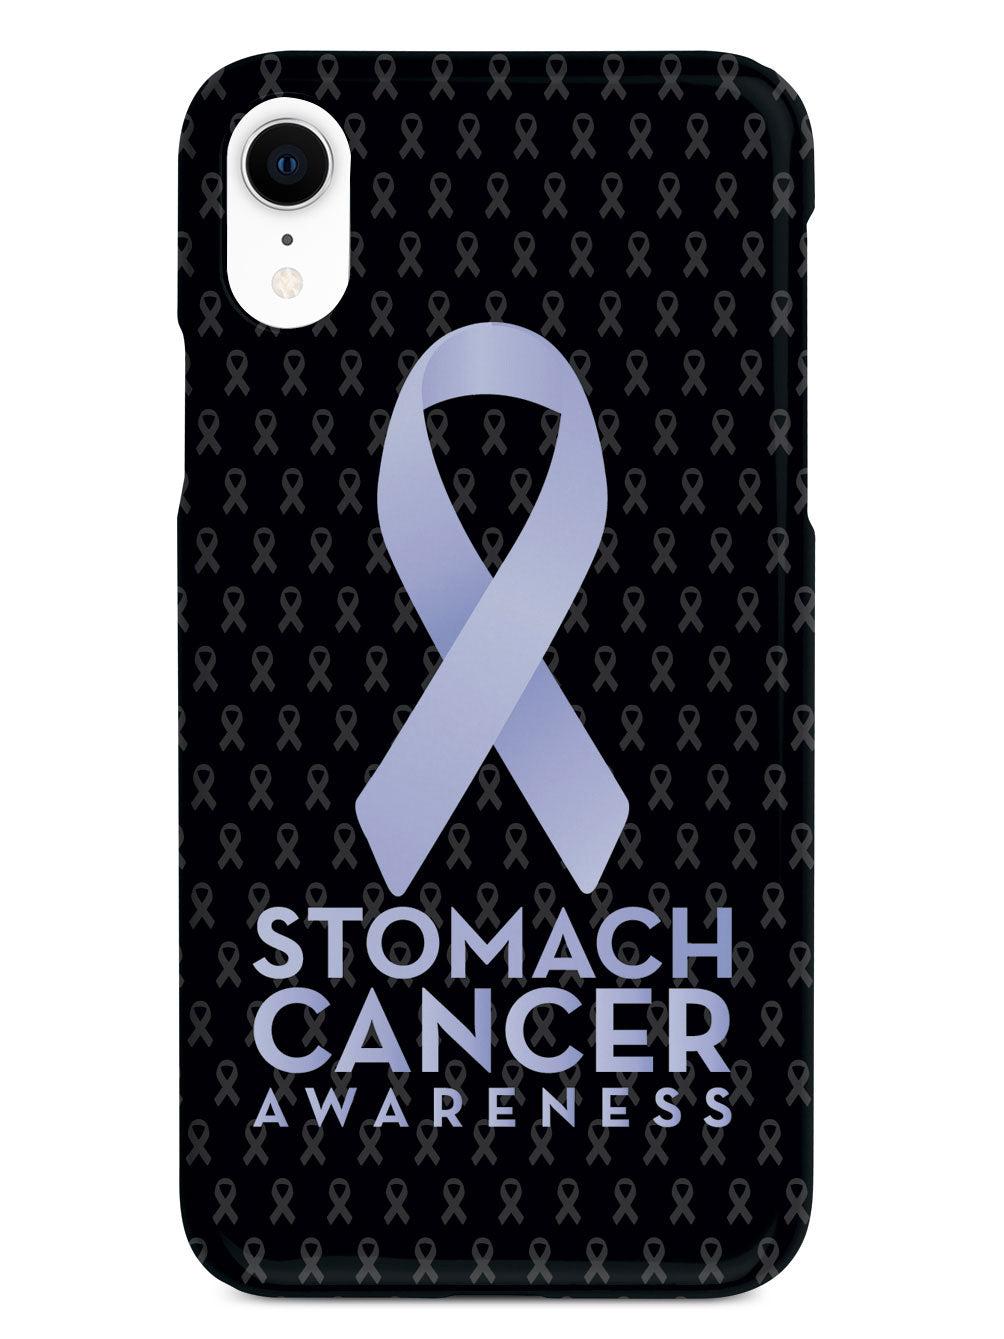 Stomach Cancer Awareness - Black Case